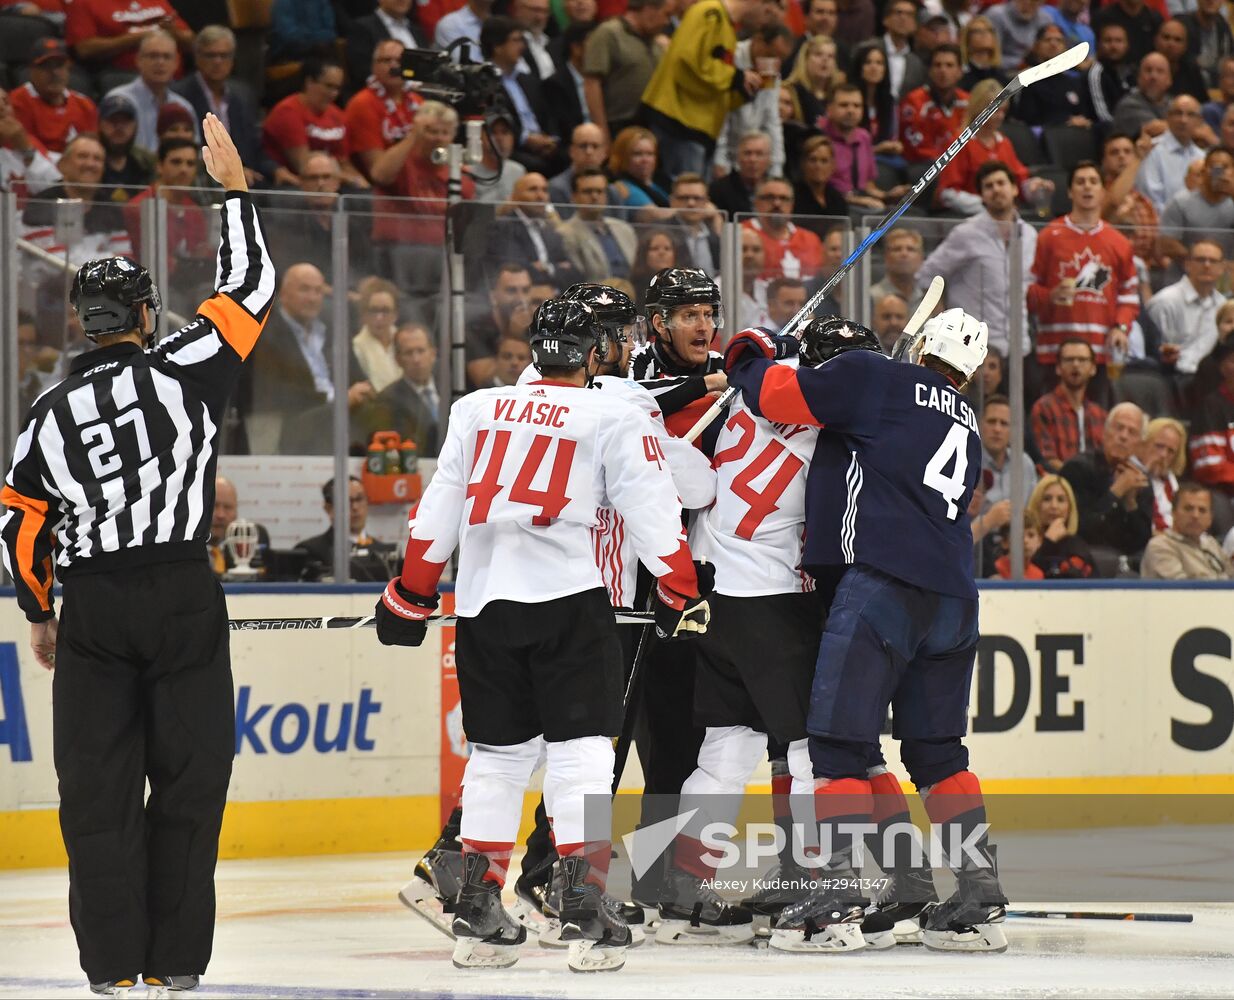 2016 World Cup of Hockey. USA vs. Canada